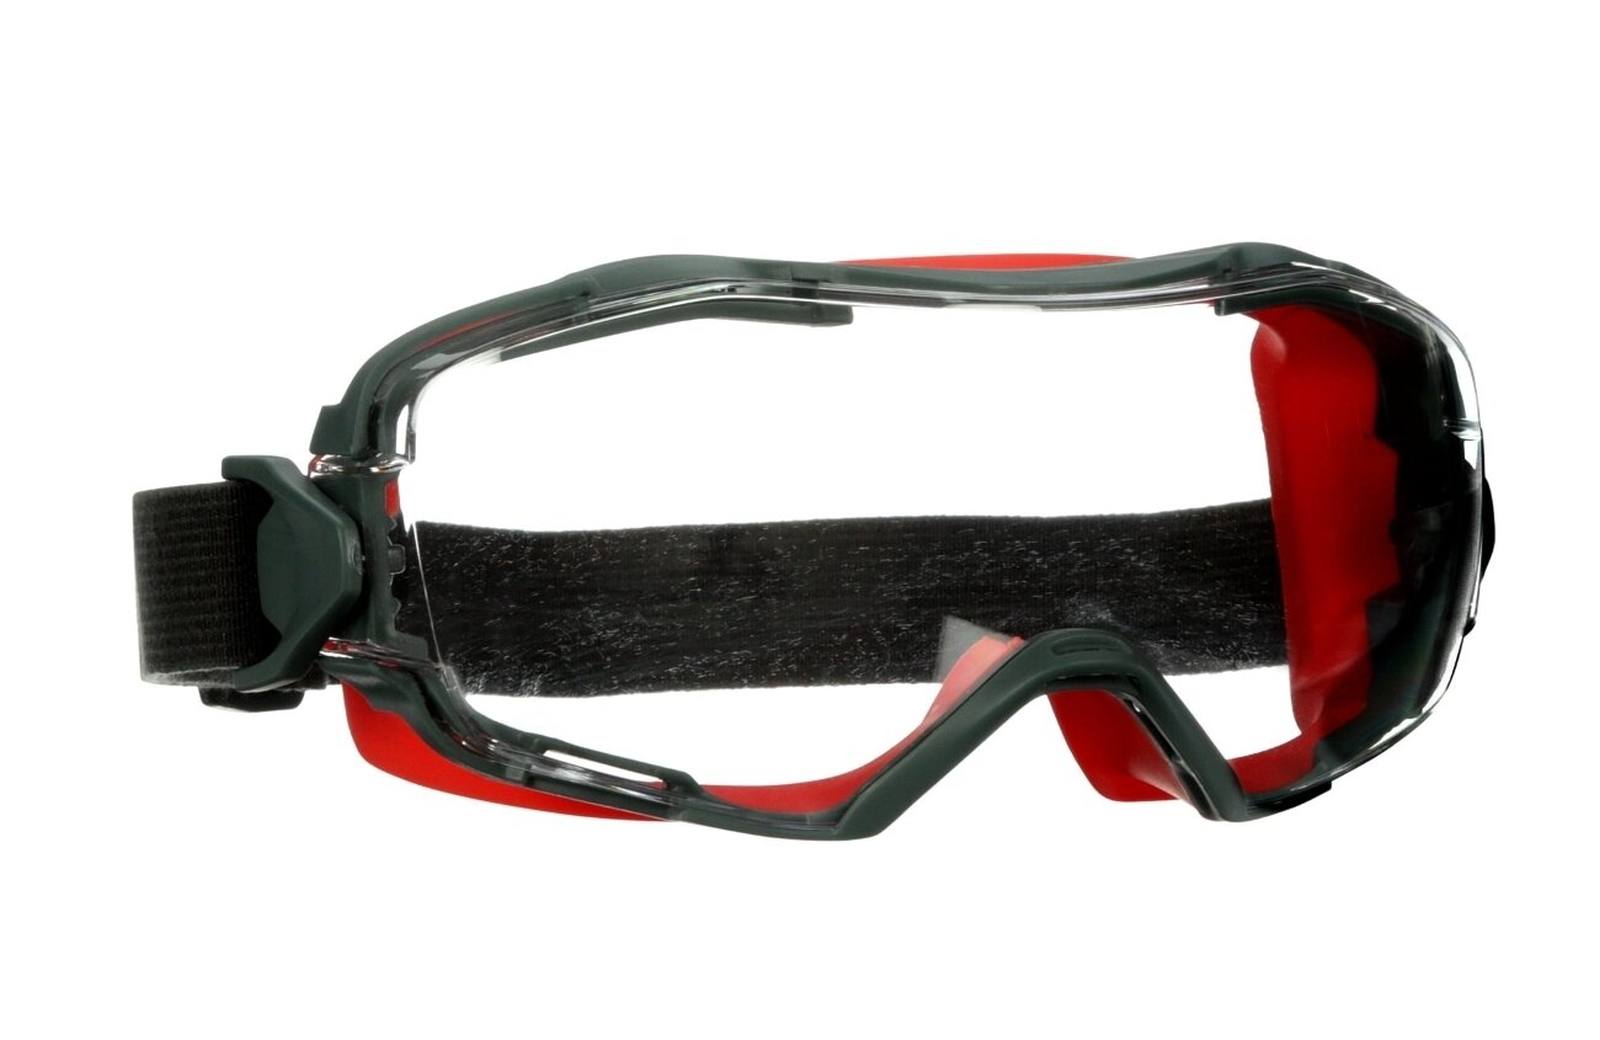 3M Gafas de visión total GoggleGear 6000, montura roja, revestimiento antivaho/antirayaduras Scotchgard (K&amp;N), lente transparente, GG6001SGAF-RED-EU